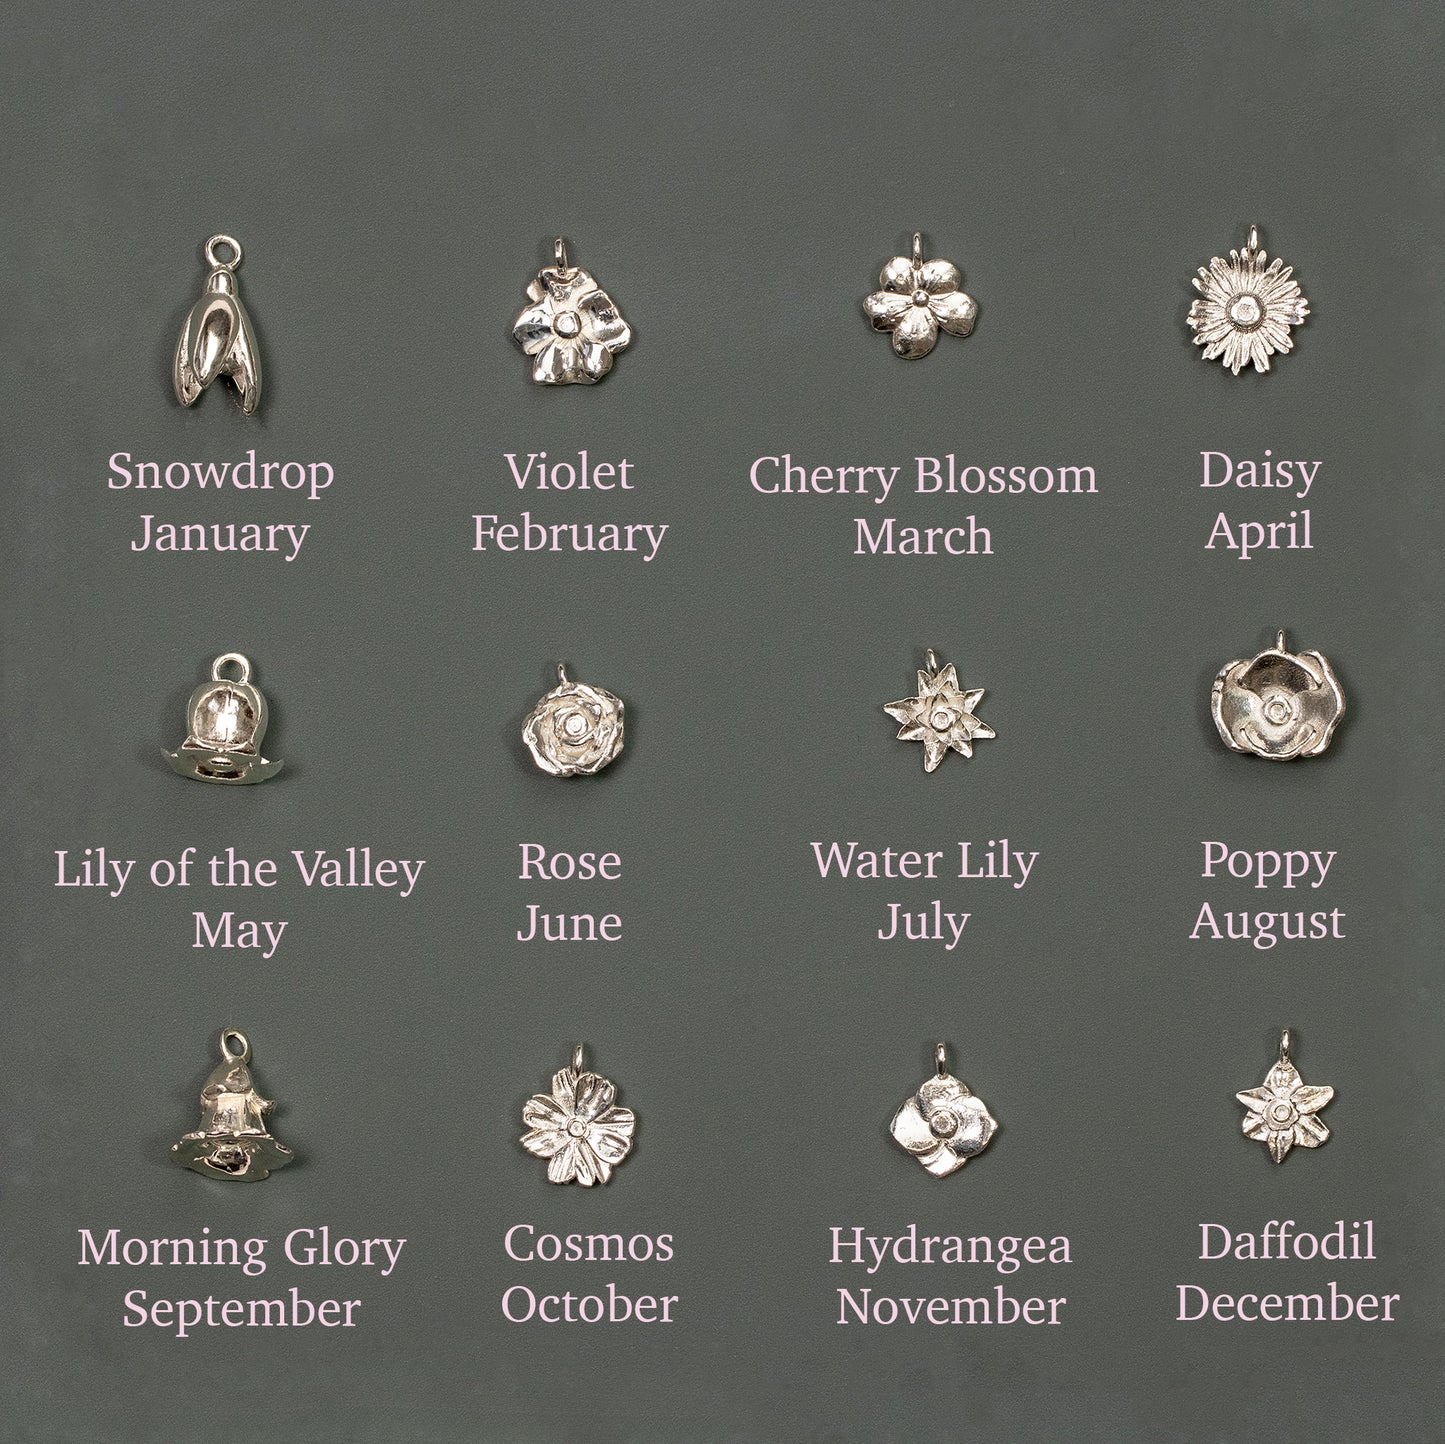 Birth Flower Necklace - Silver